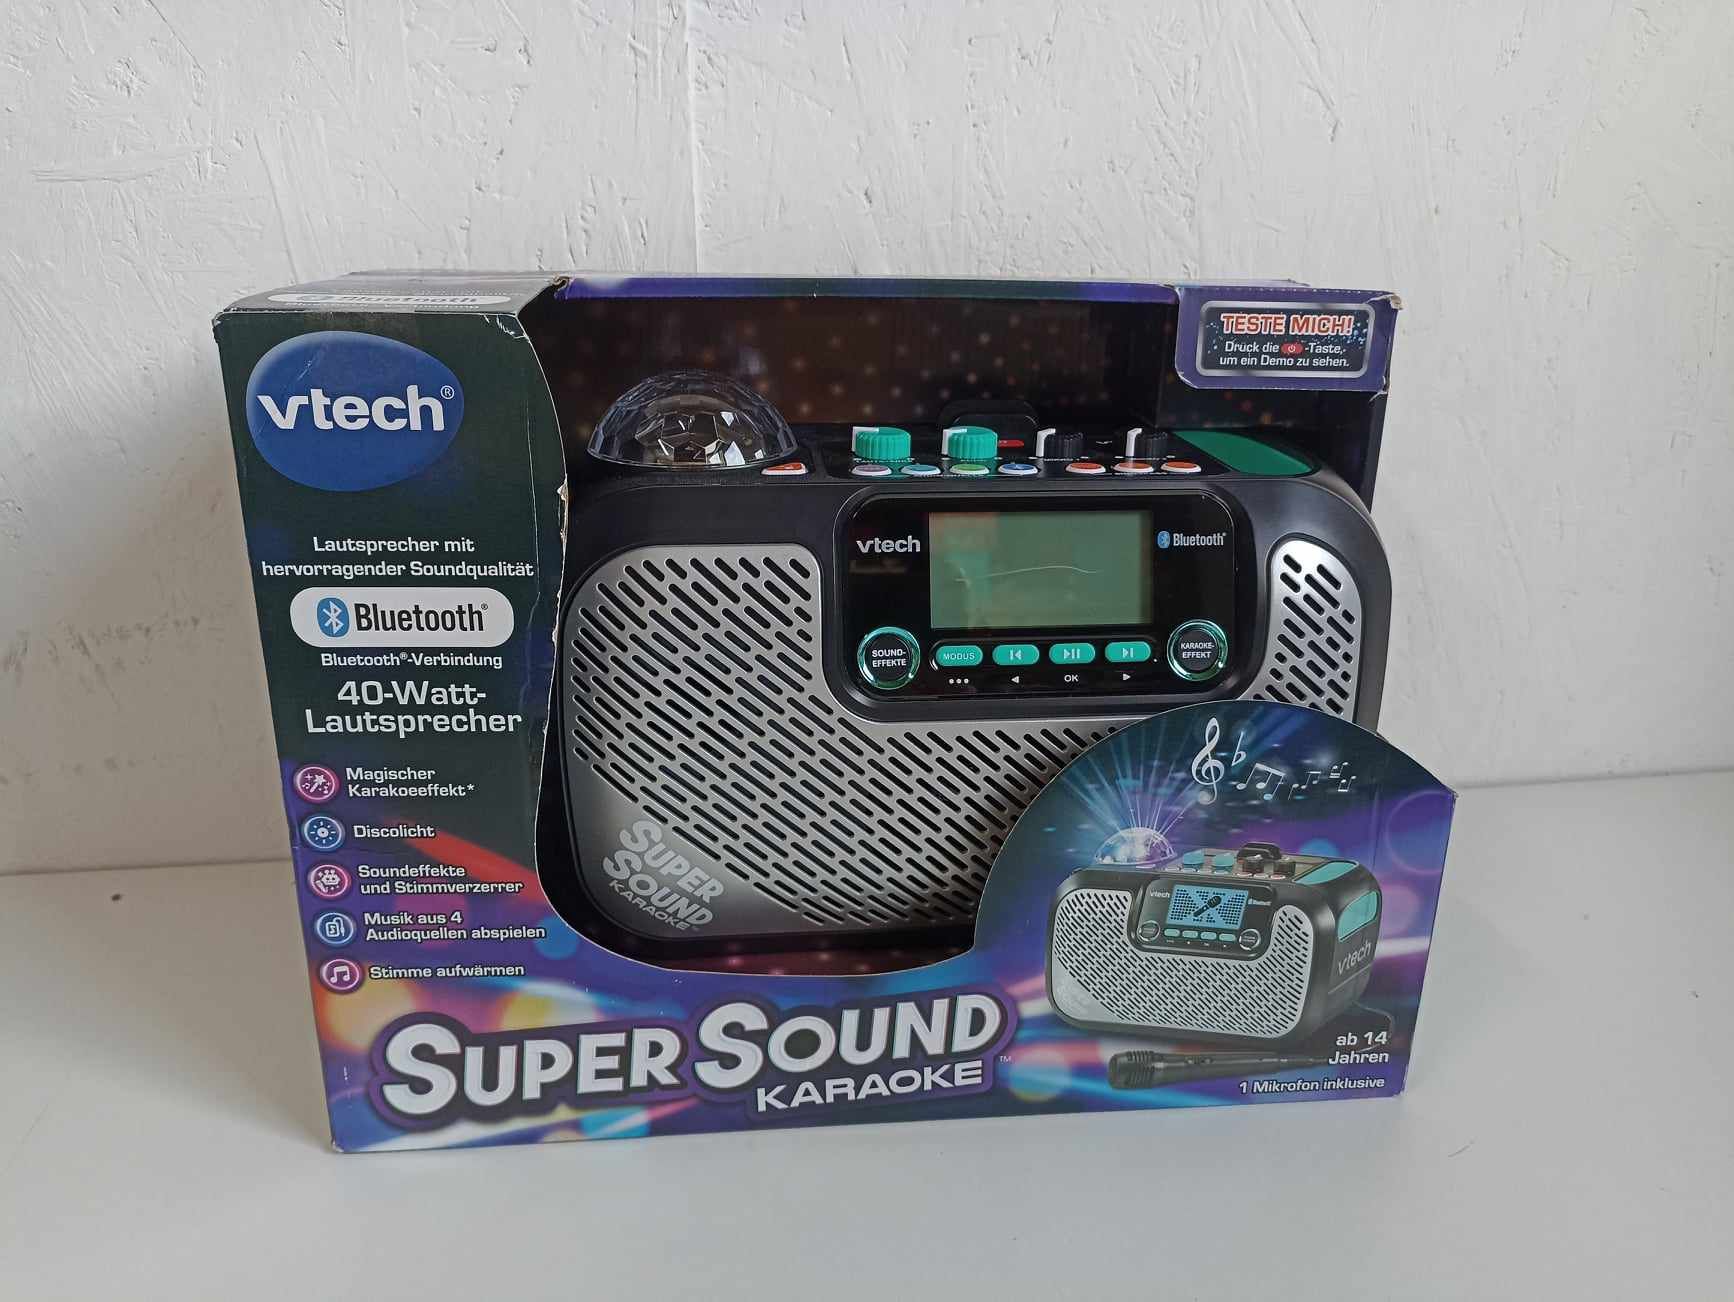 Vtech super sound karaoke radio(693)